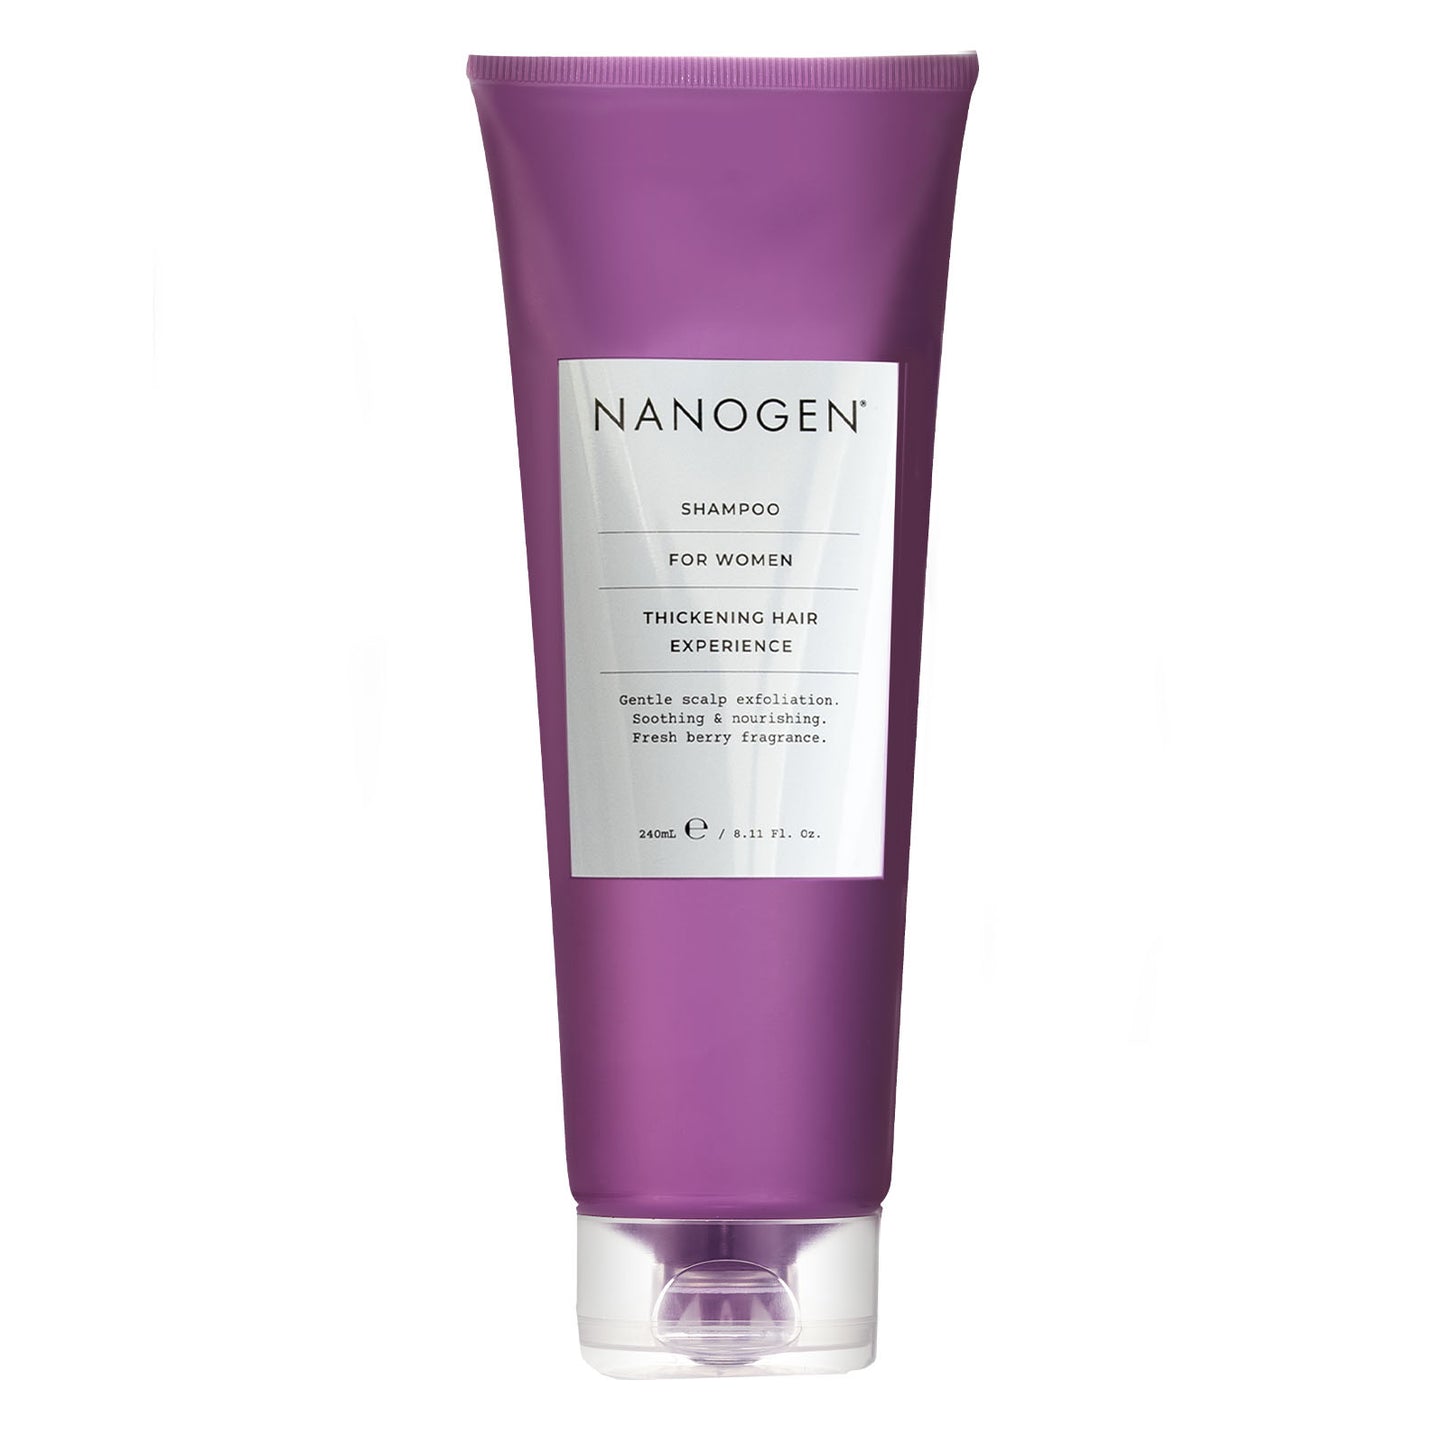 Nanogen Shampoo for Women